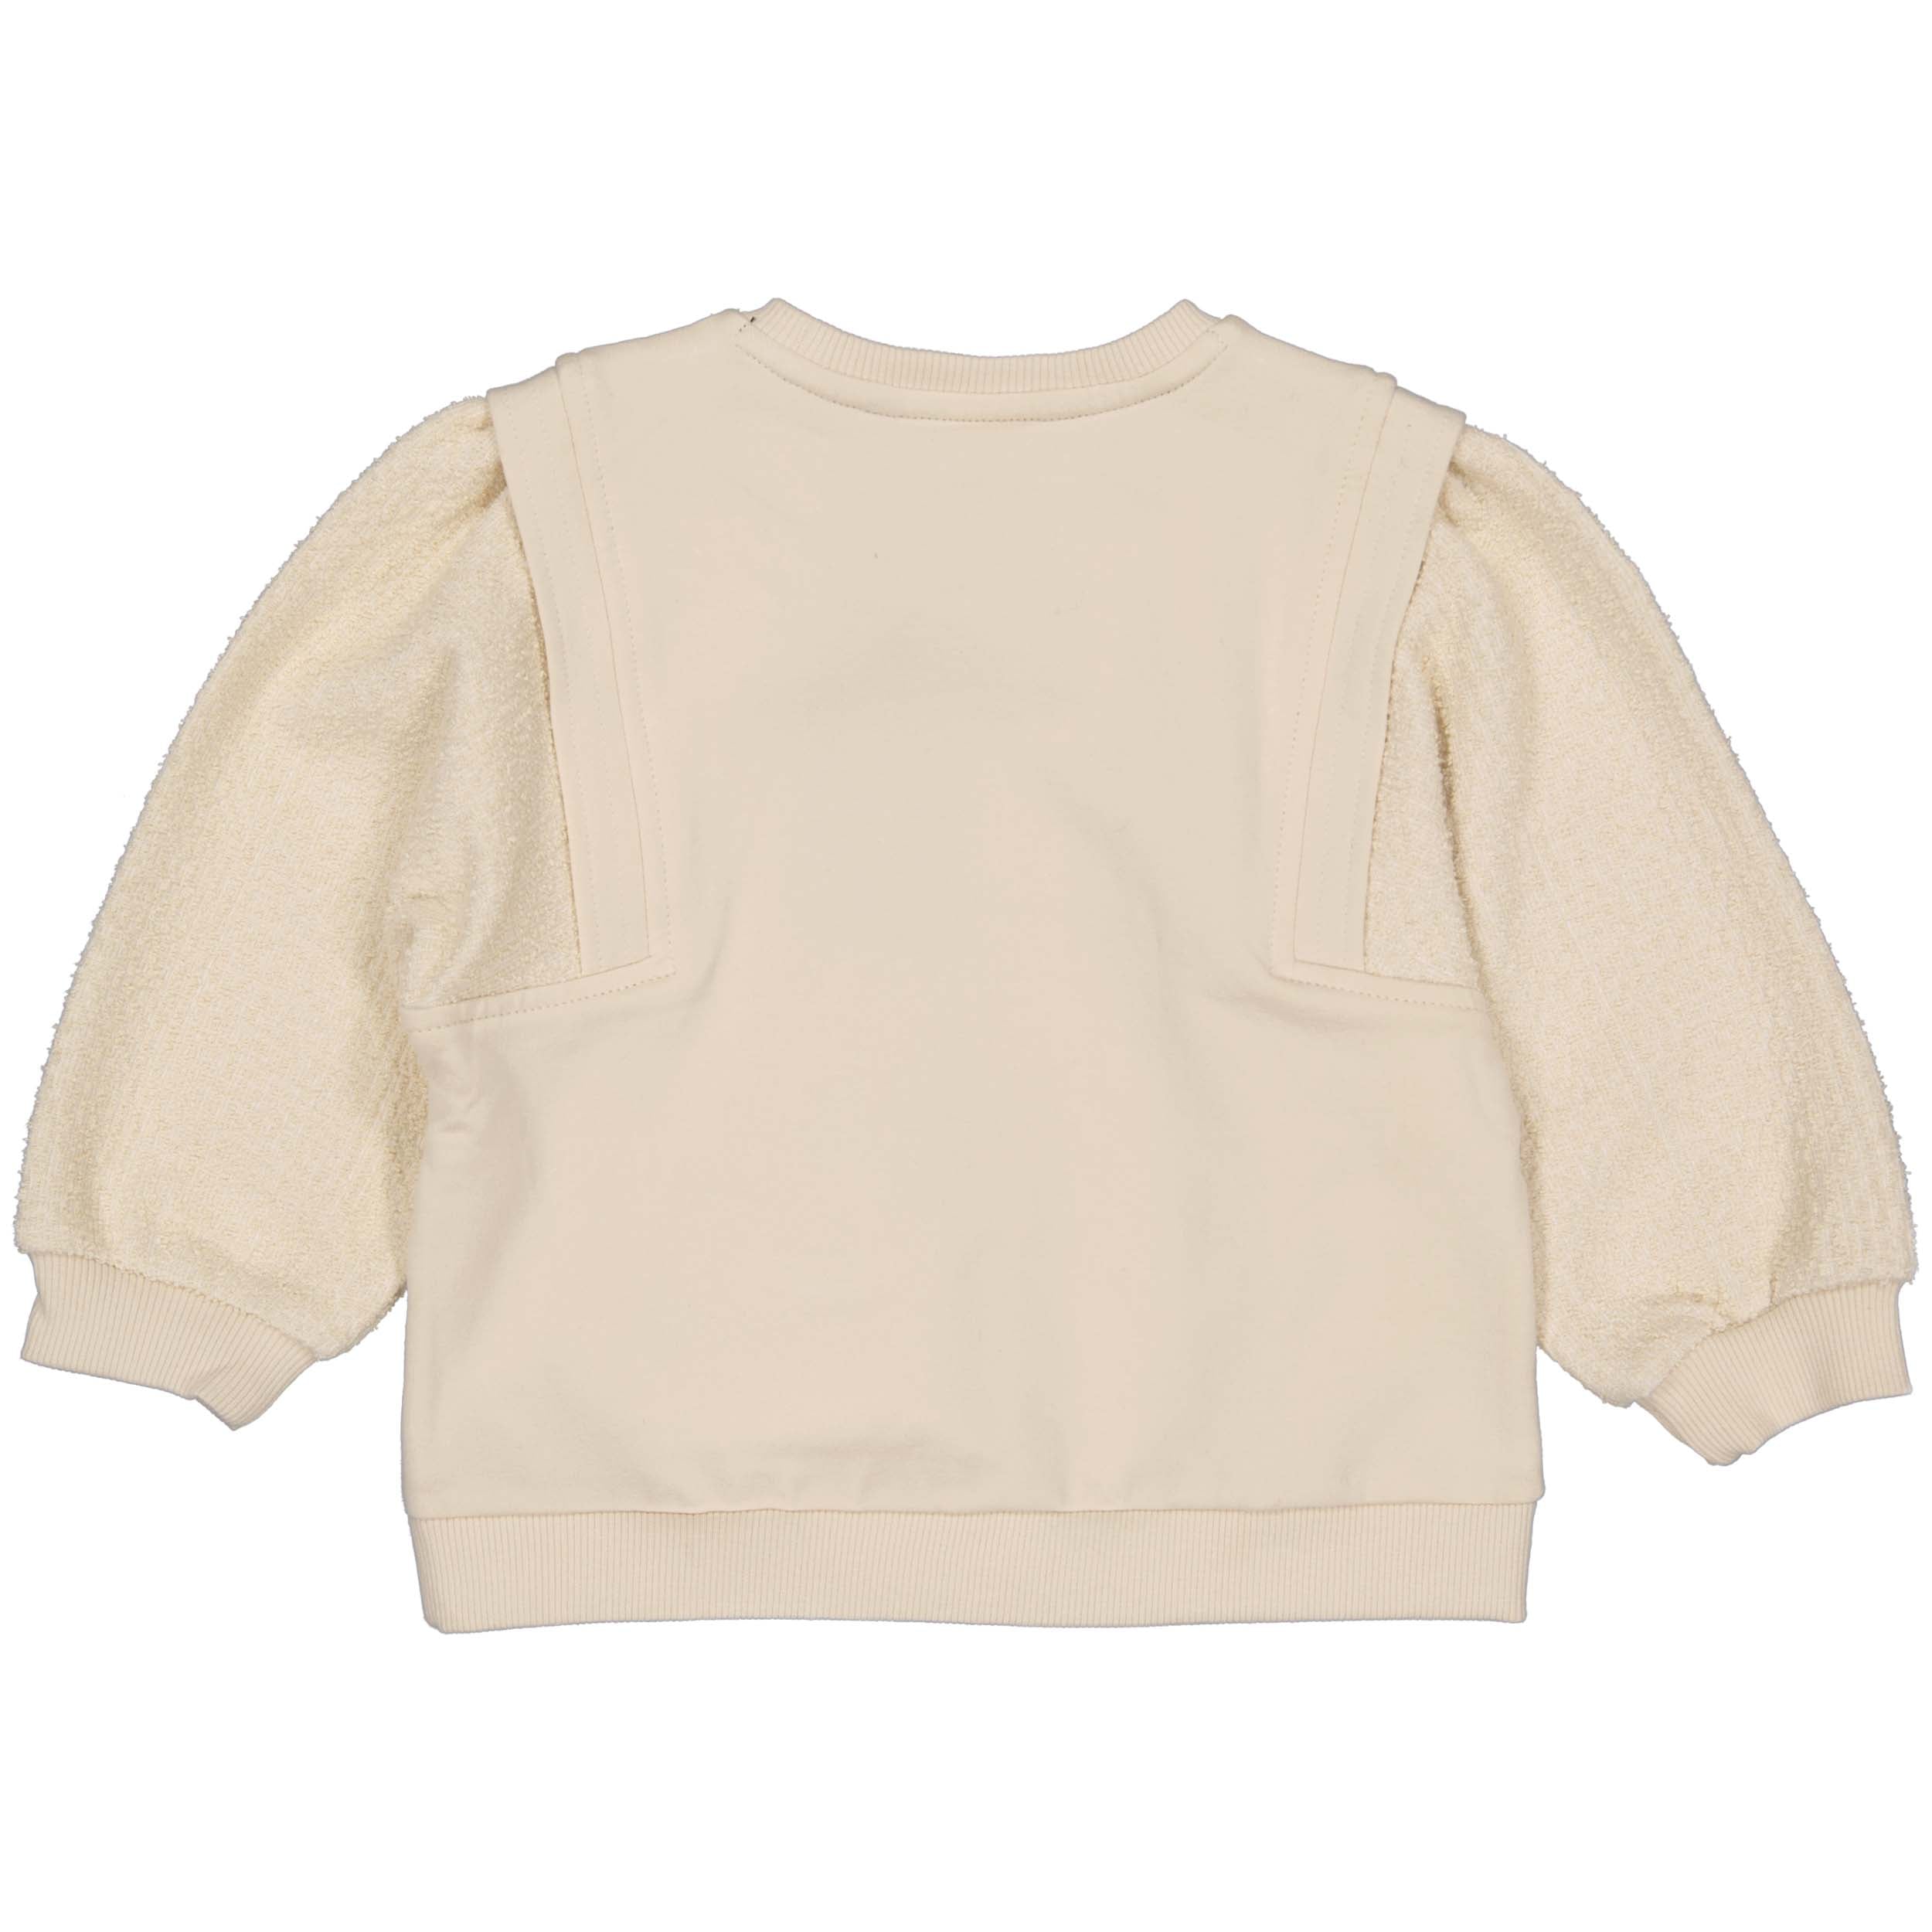 Meisjes Sweater GERDALW231 van Little Levv in de kleur Kit in maat 128.